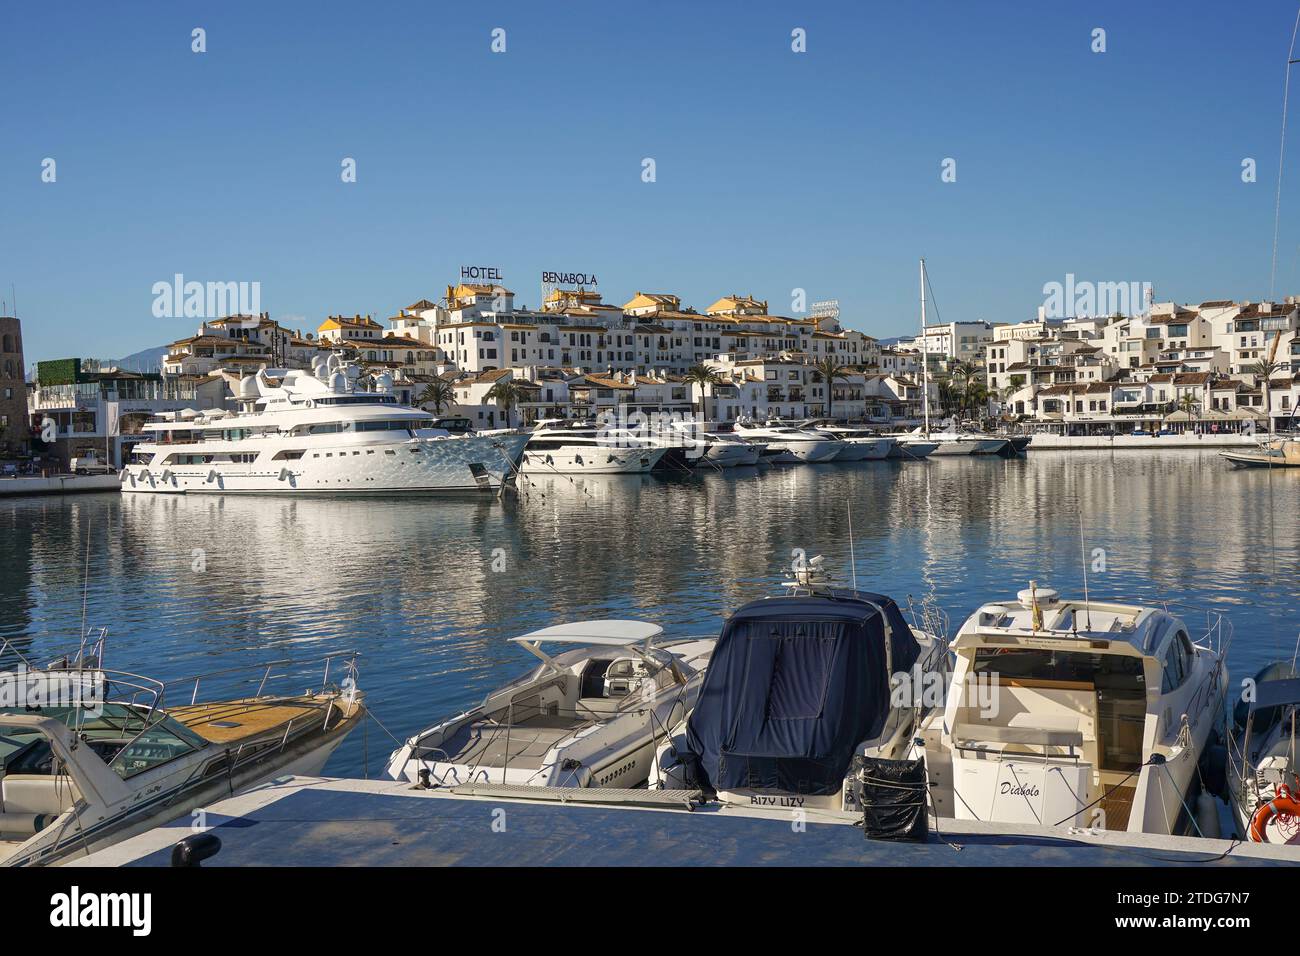 Puerto Banús, marina de luxe avec Lady Haya Yacht amarré, Marbella, Costa del sol, Andalousie, Espagne. Banque D'Images